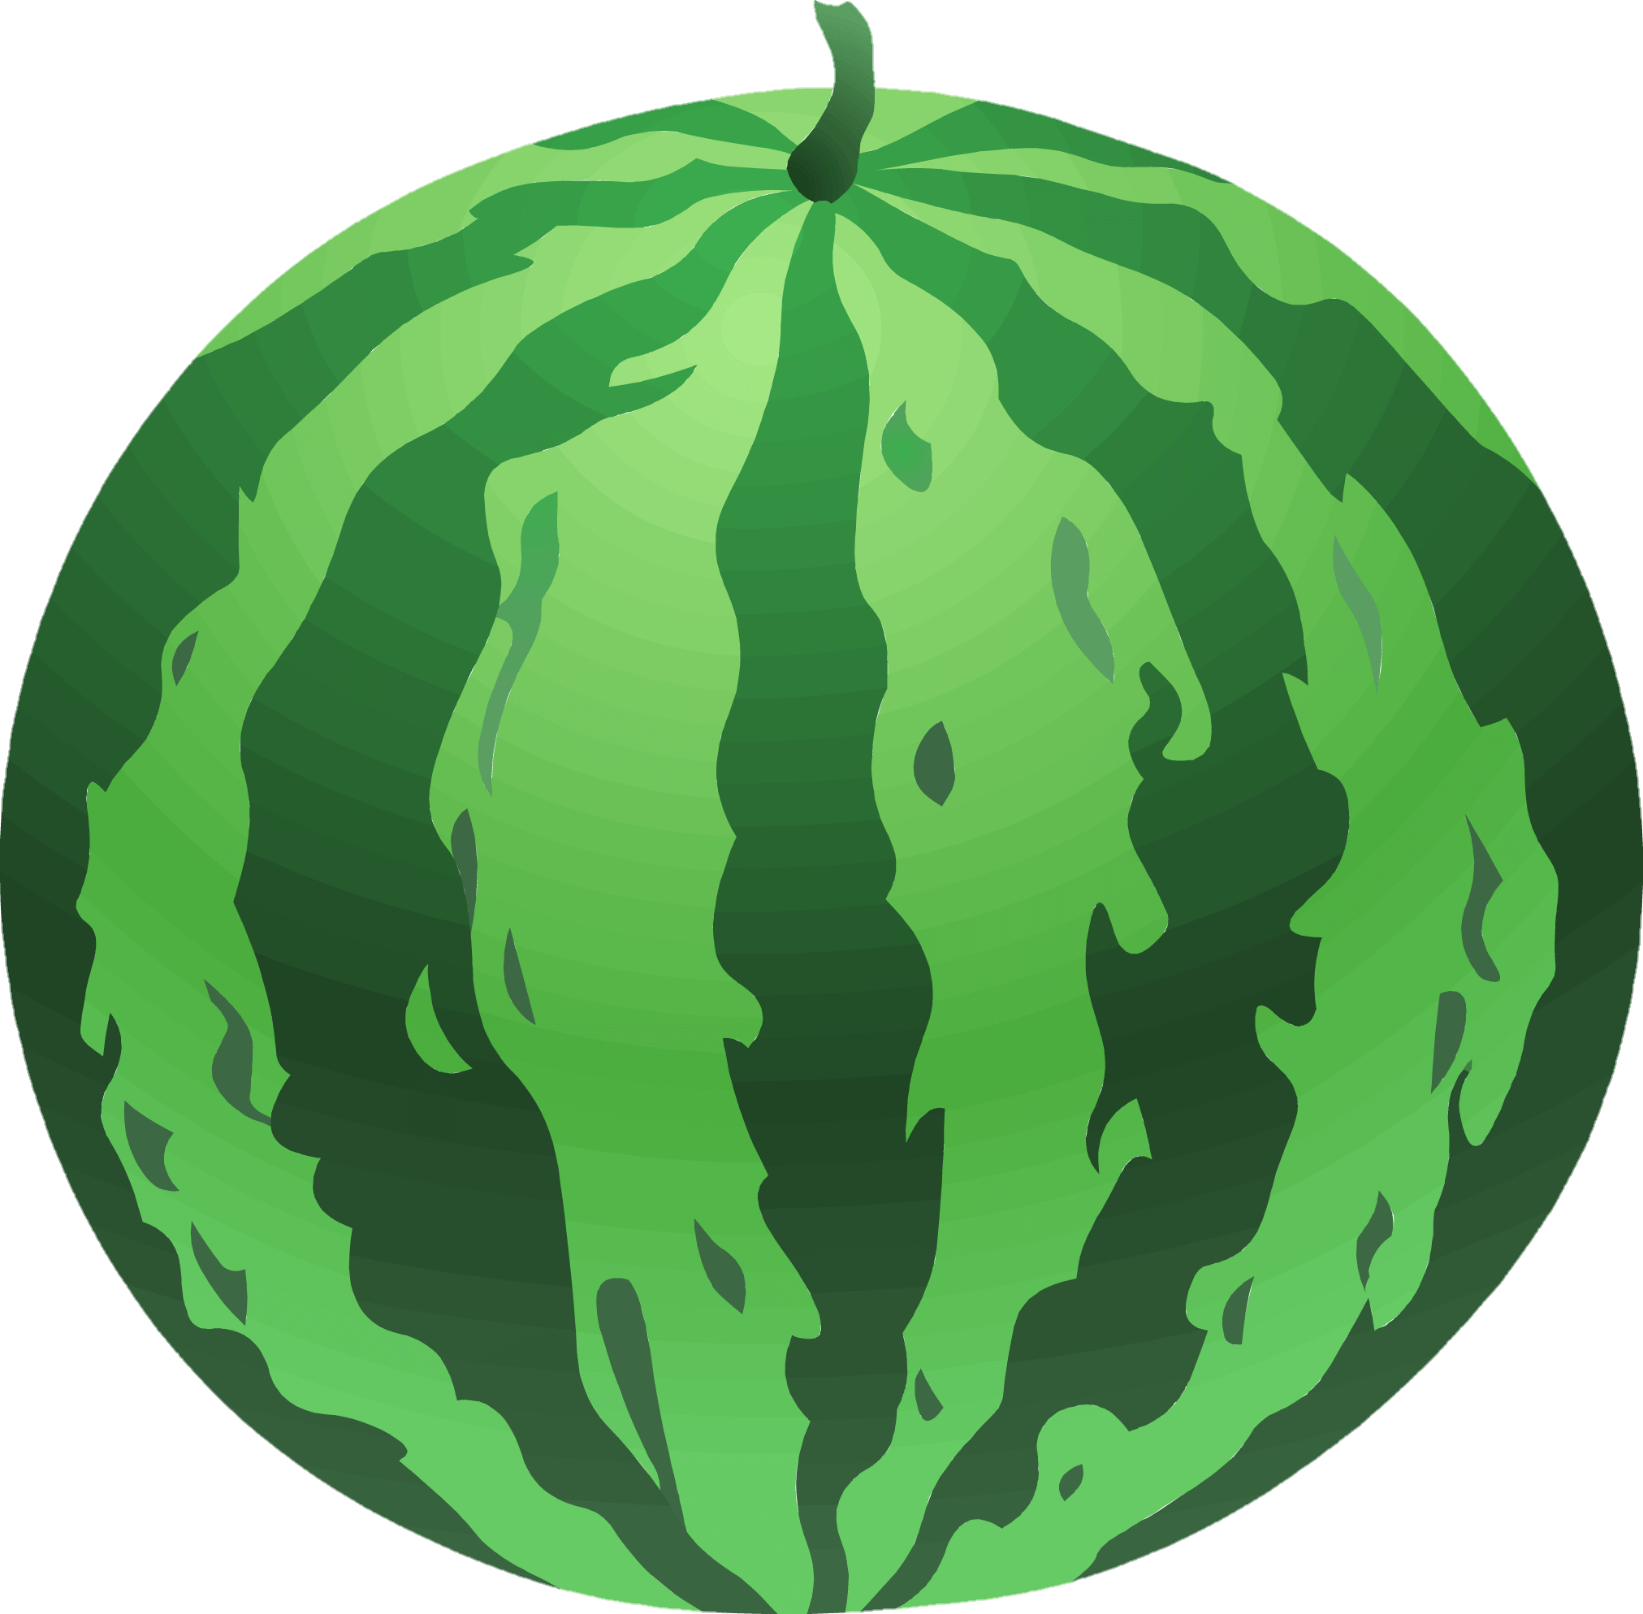 watermelon-20